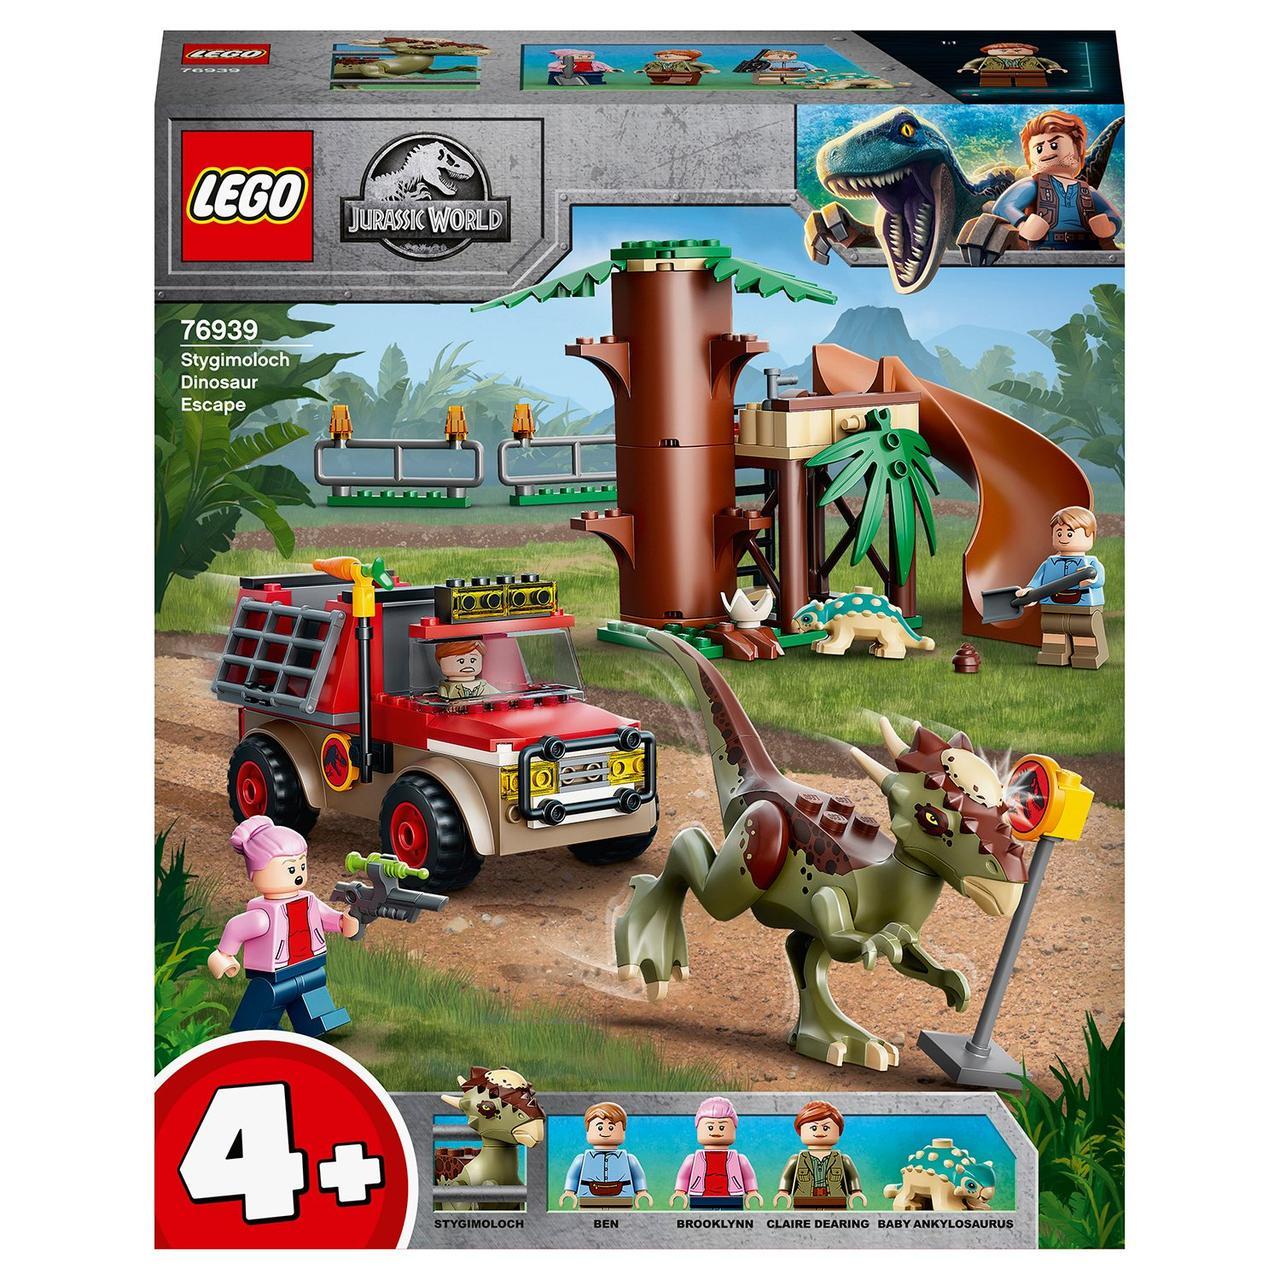 76939 Lego Jurassic World Побег стигимолоха, Лего Мир Юрского периода